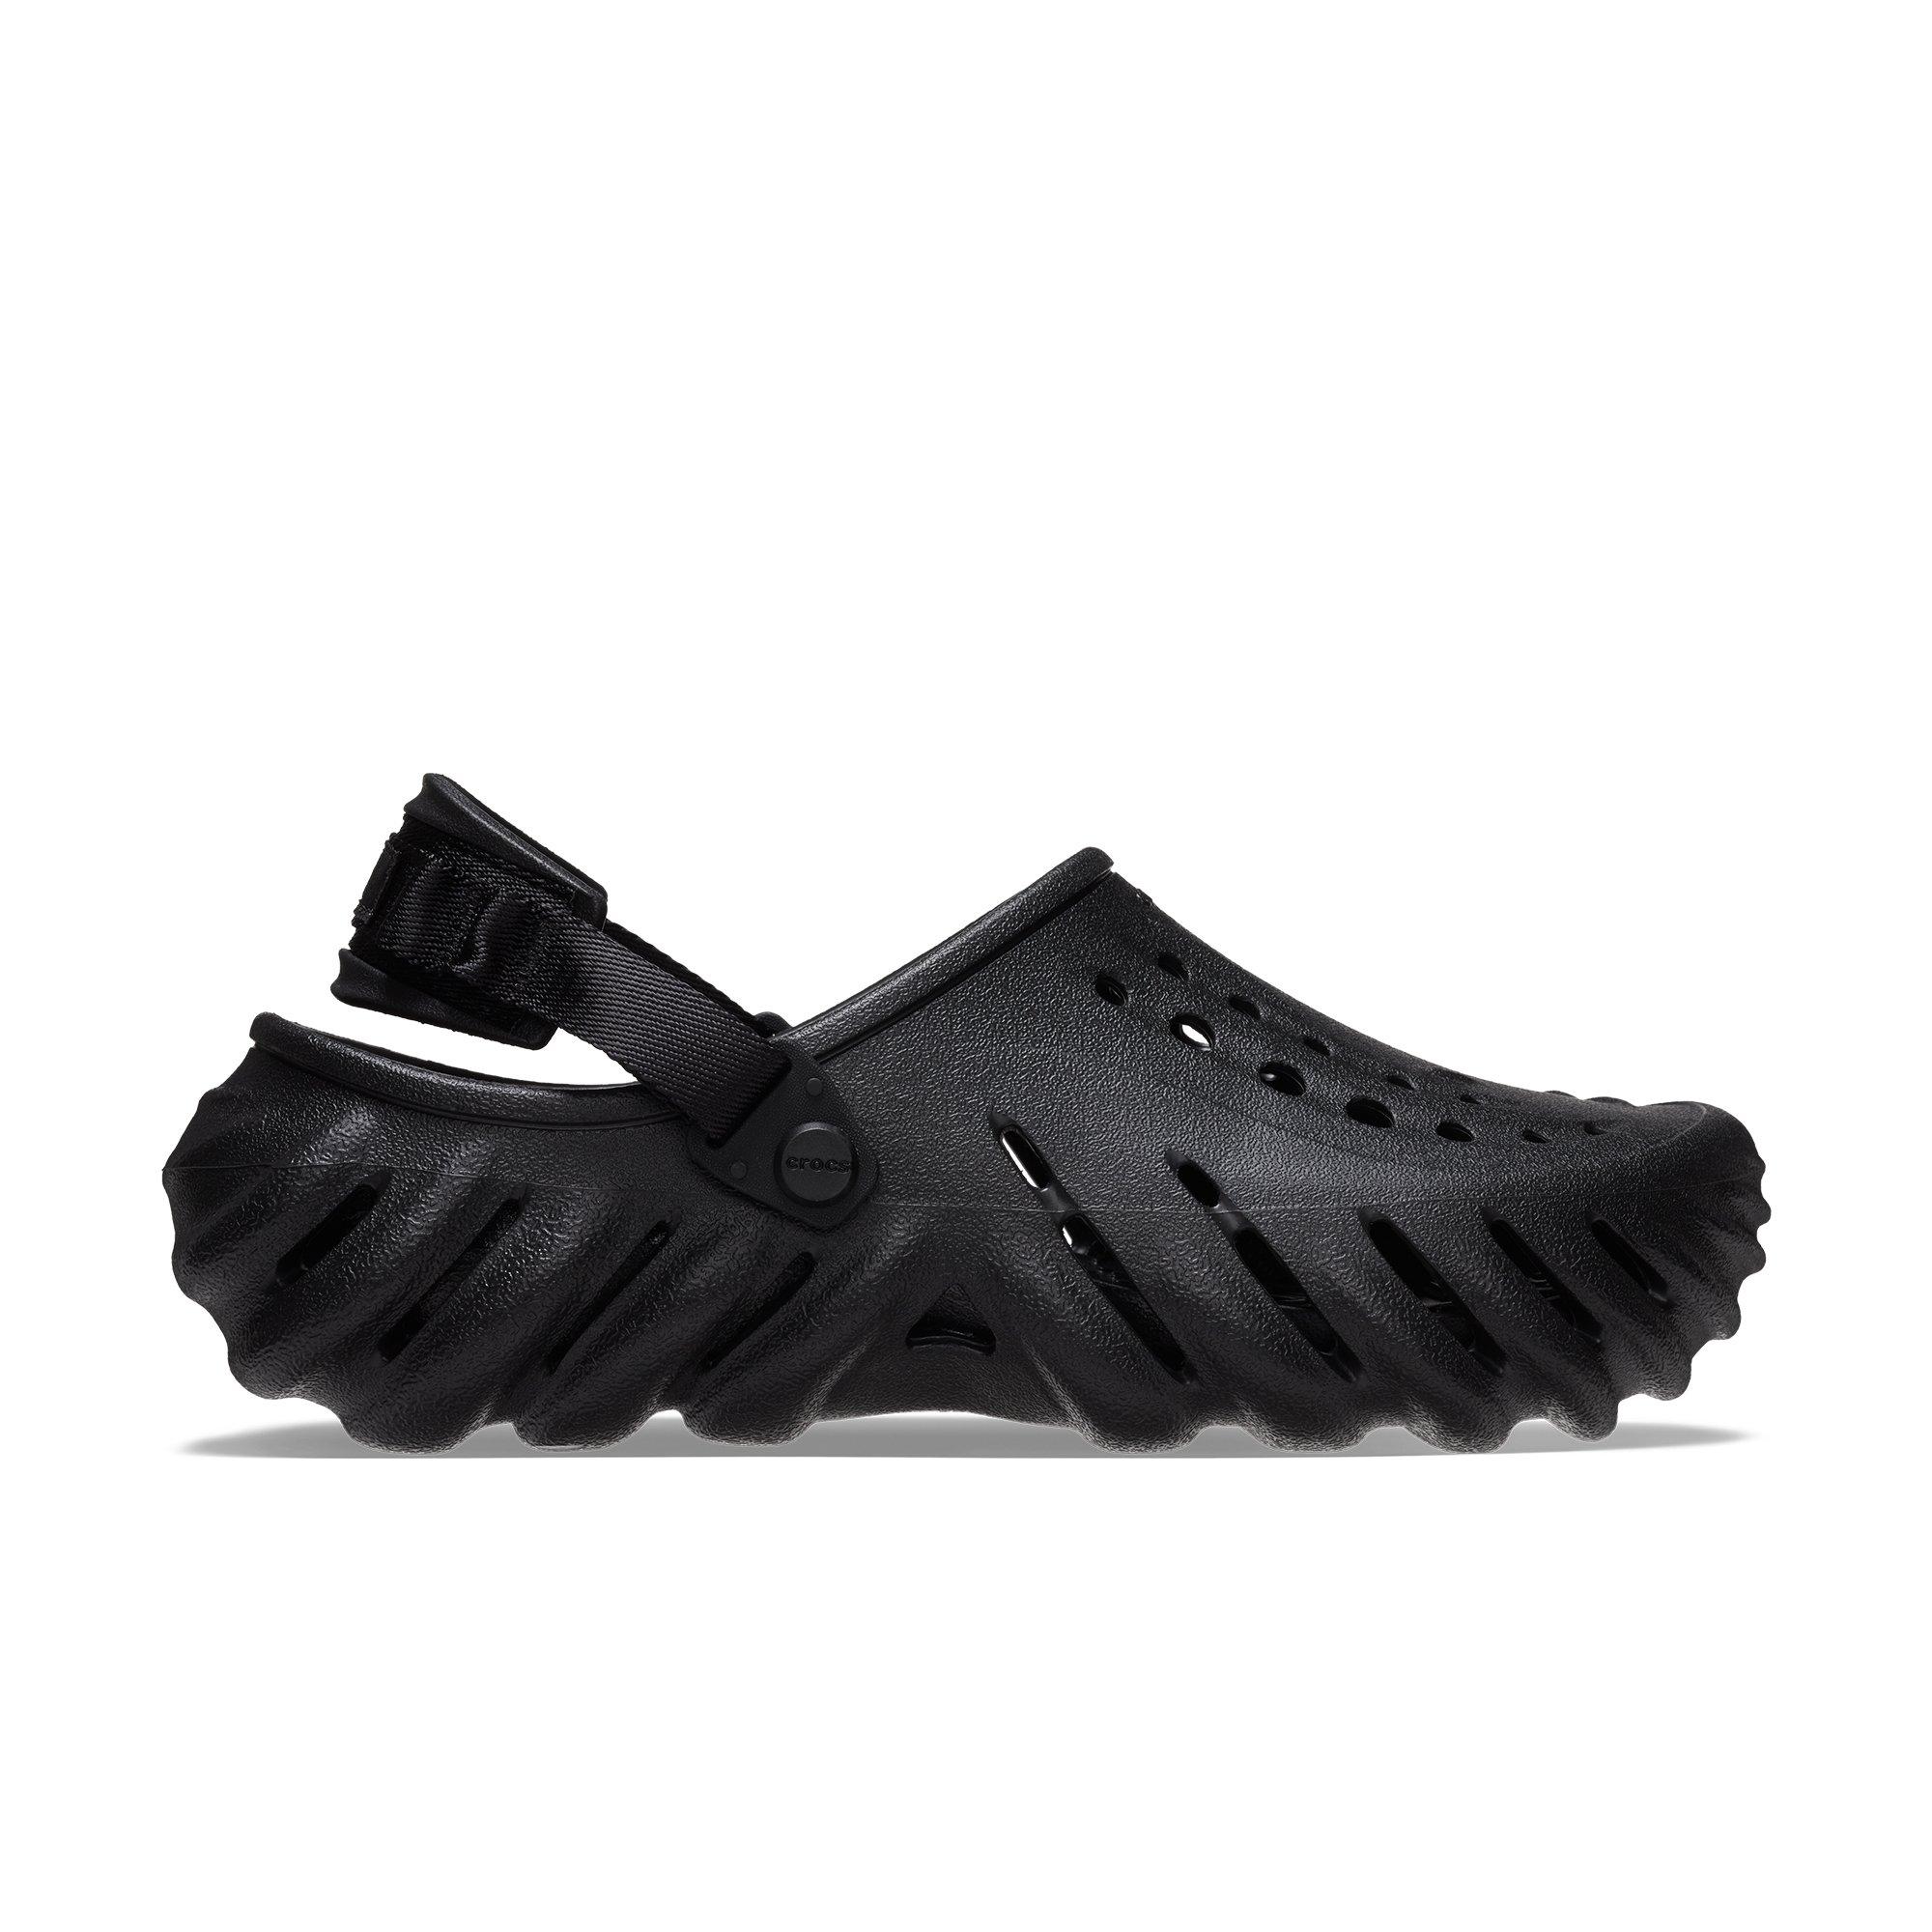 Crocs "Black" Unisex Clog